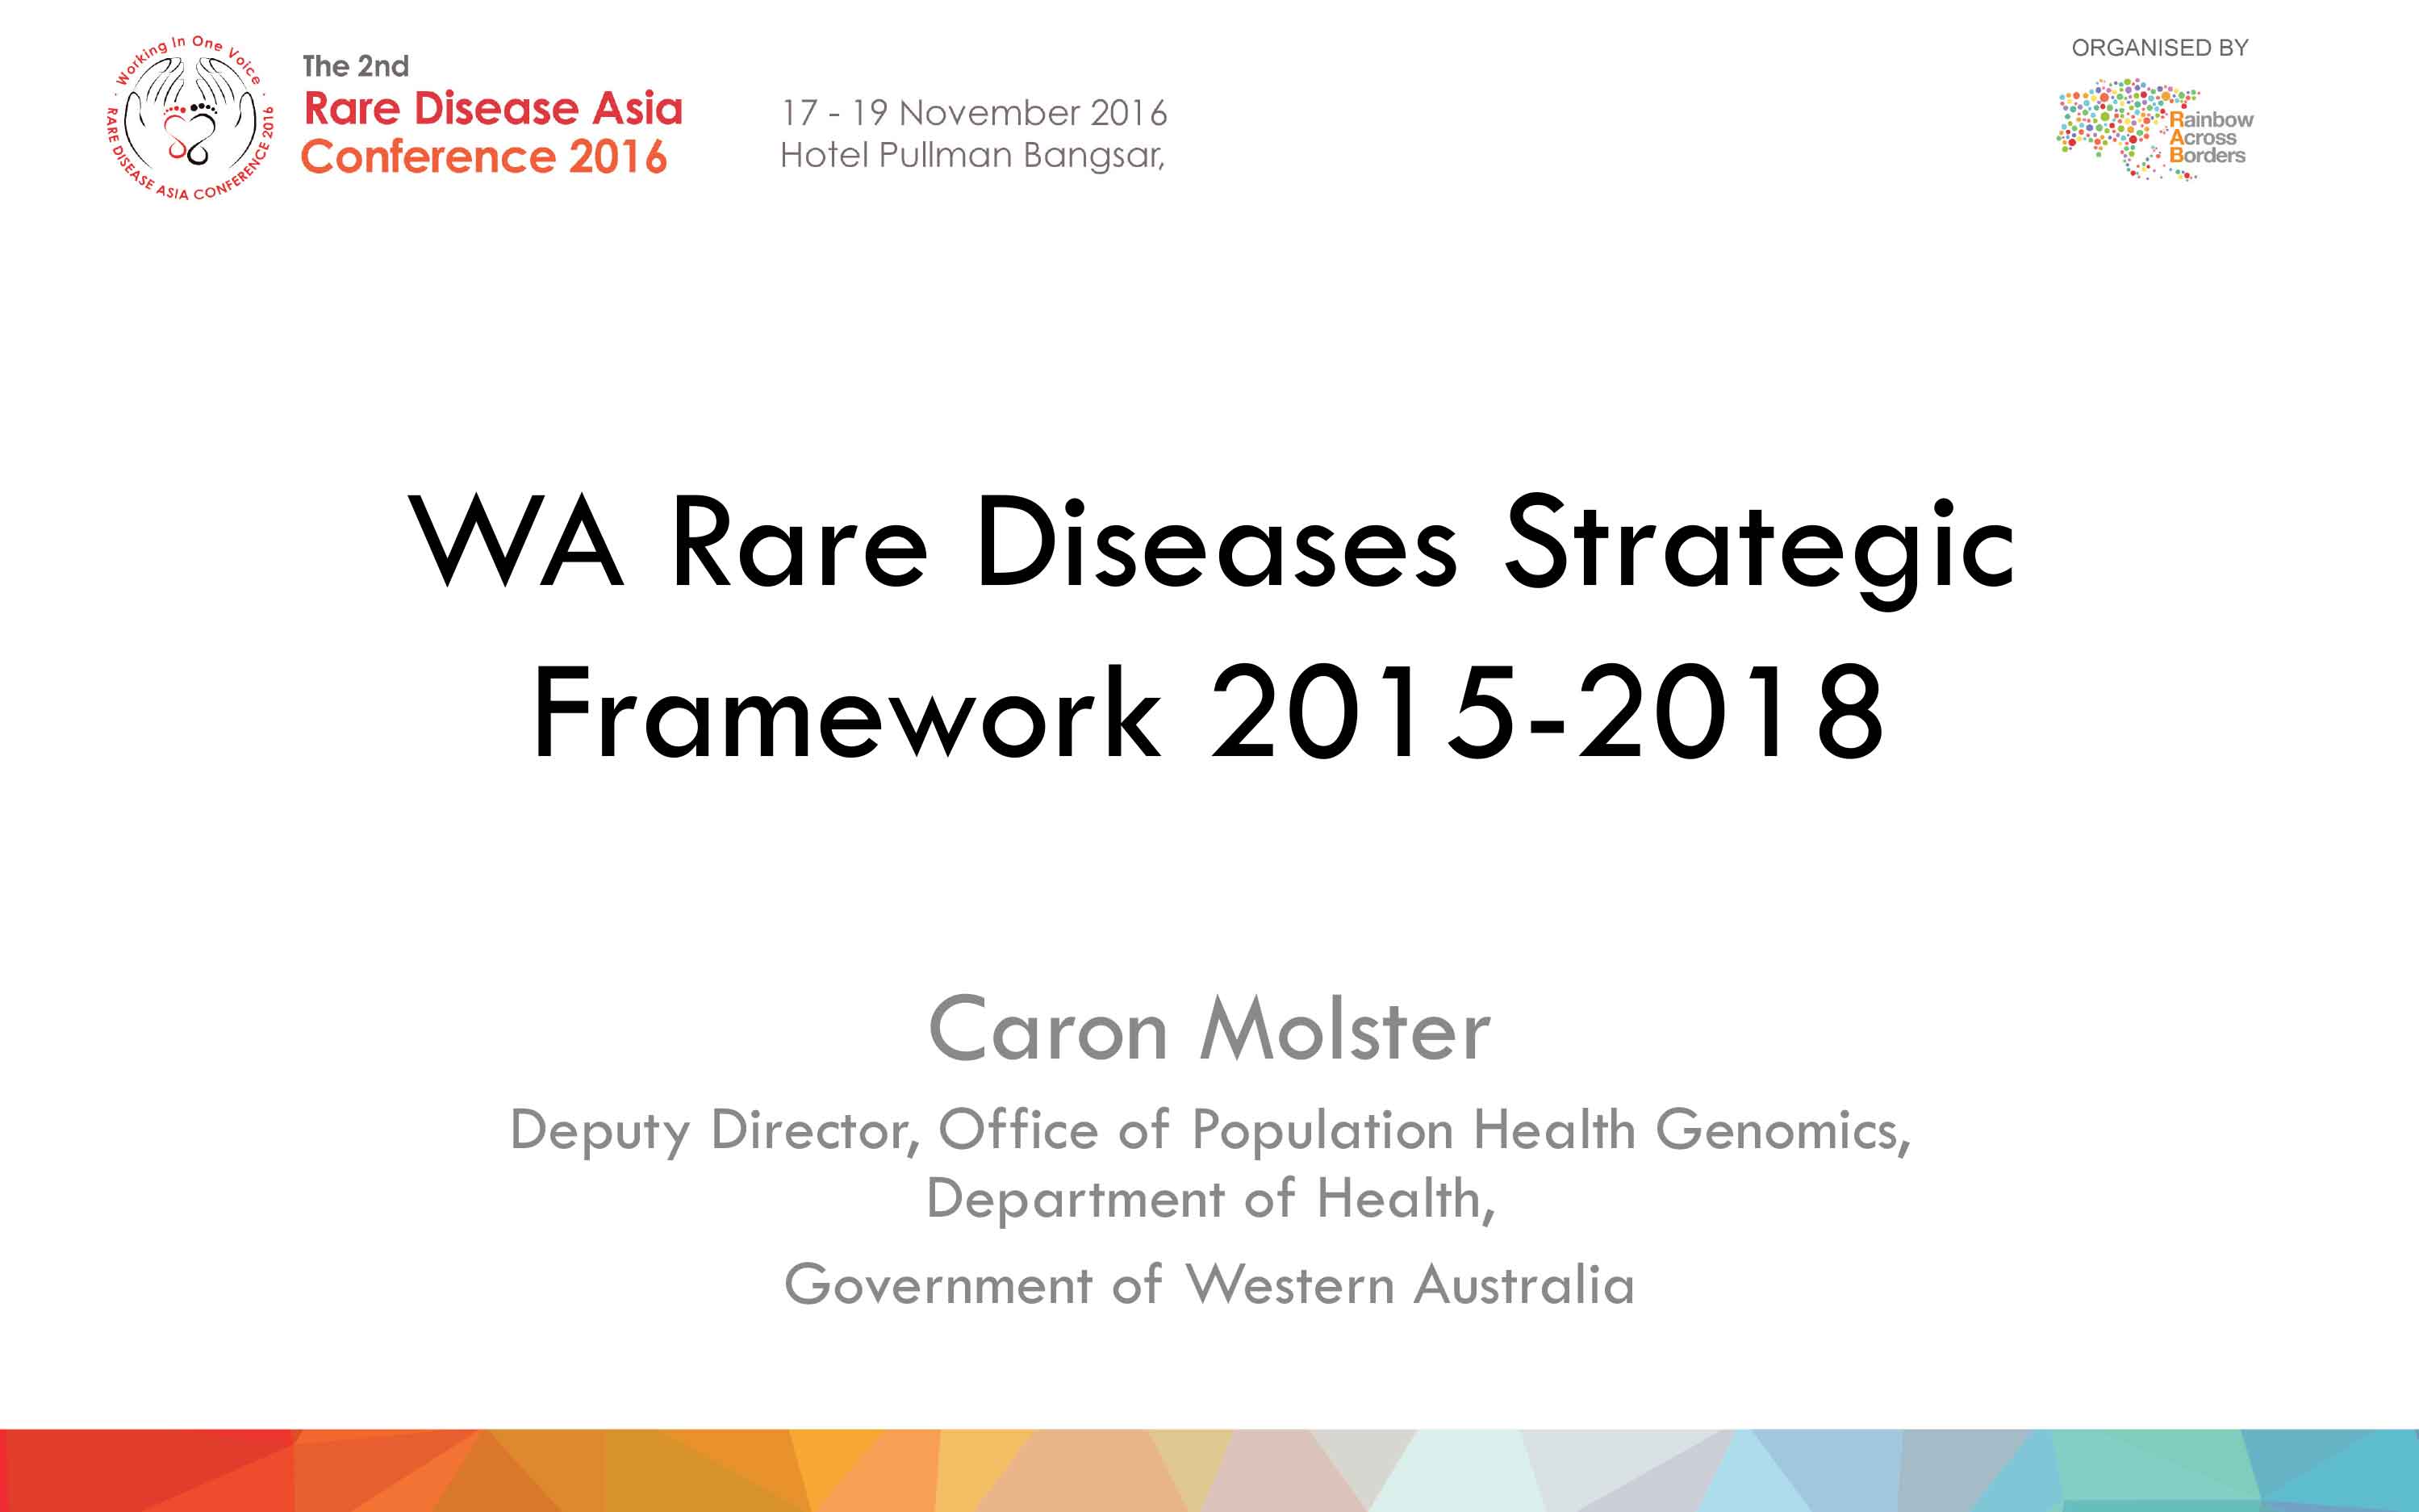 Caron Molster (Deputy Director, Office of Population Health Genomics, Department of Health, Government of Western Australia) - WA Rare Diseases Strategic Framework 2015-2018